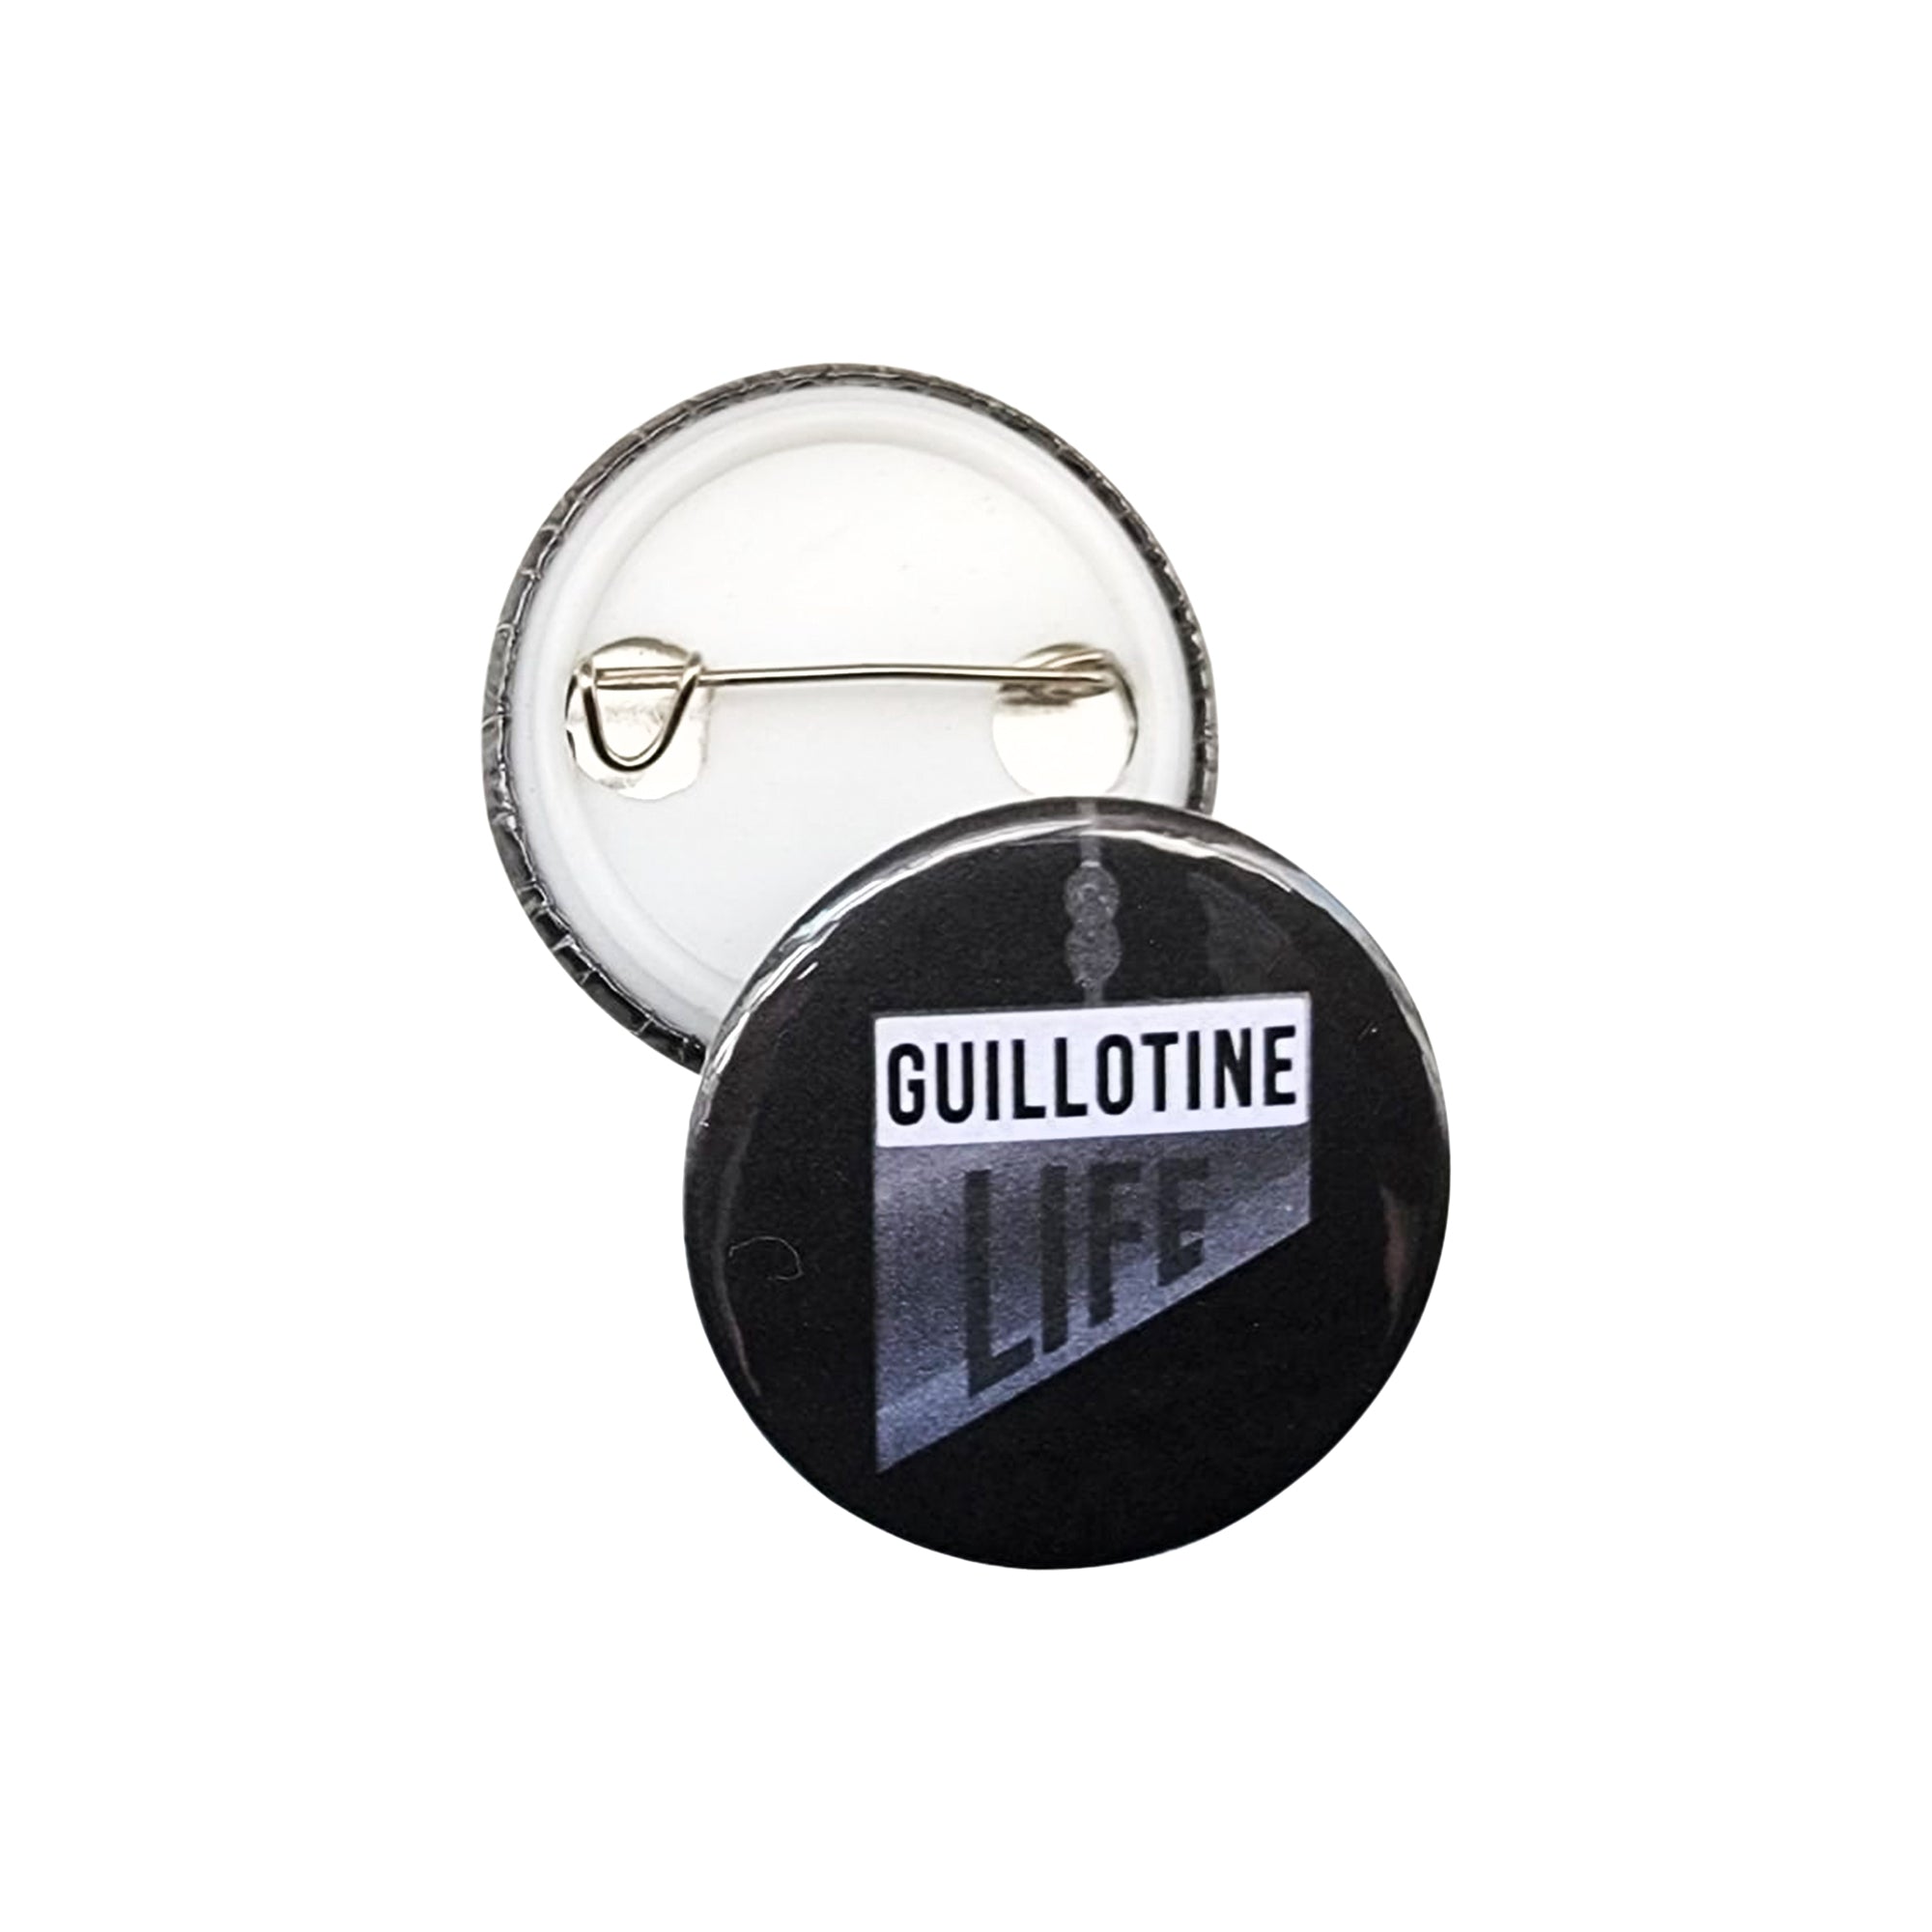 guillotine pride pins